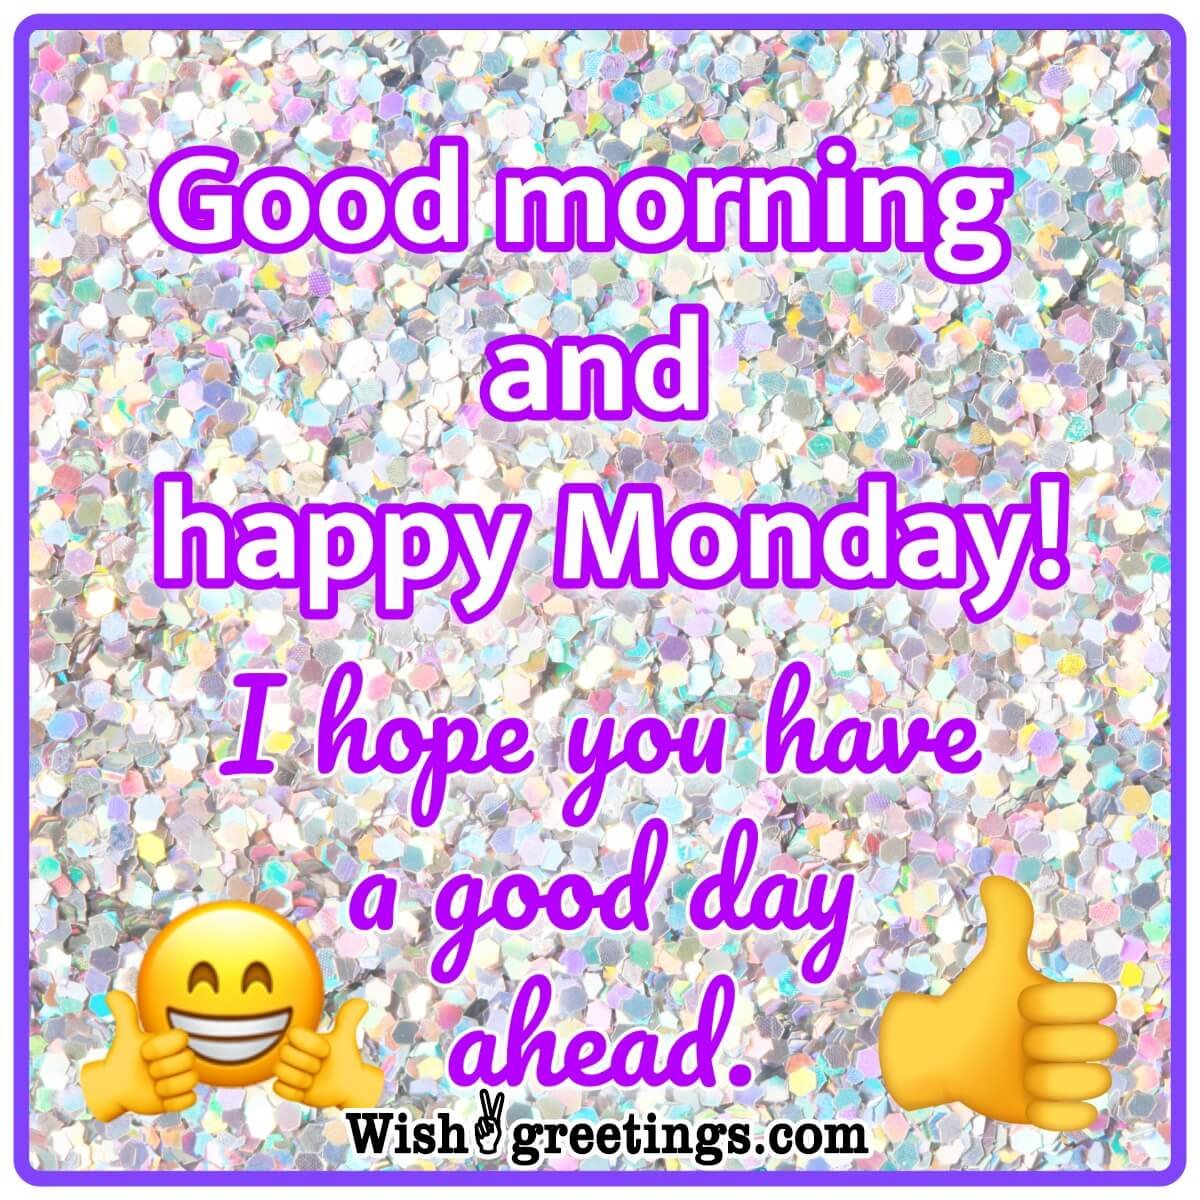 Good Morning And Happy Monday Wish Image